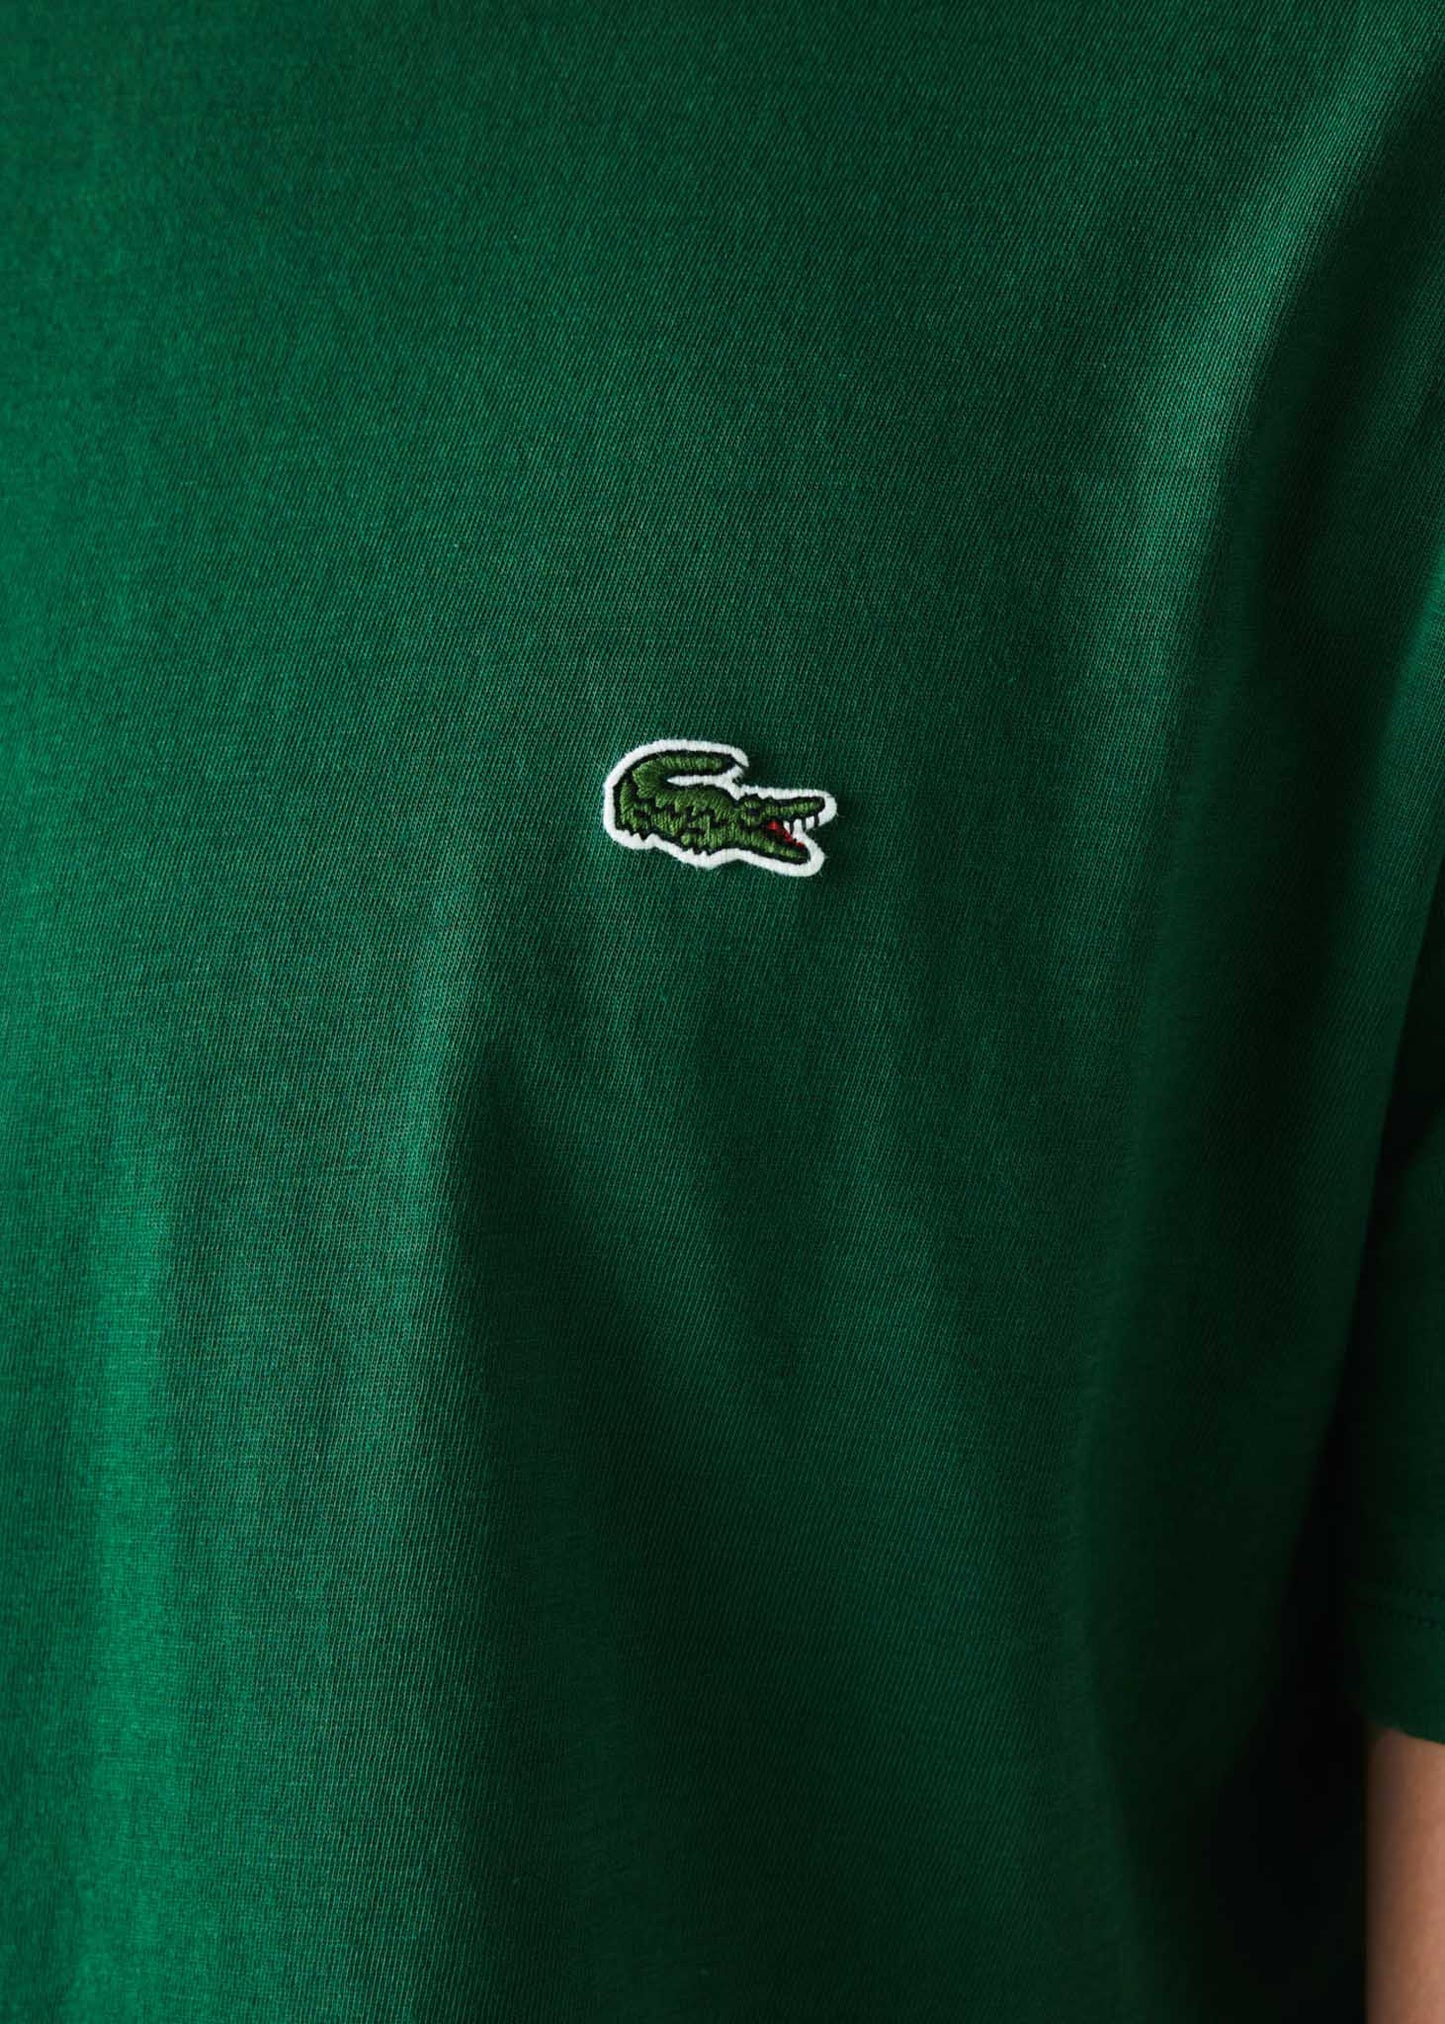 Lacoste T-shirts  T-shirt - green 